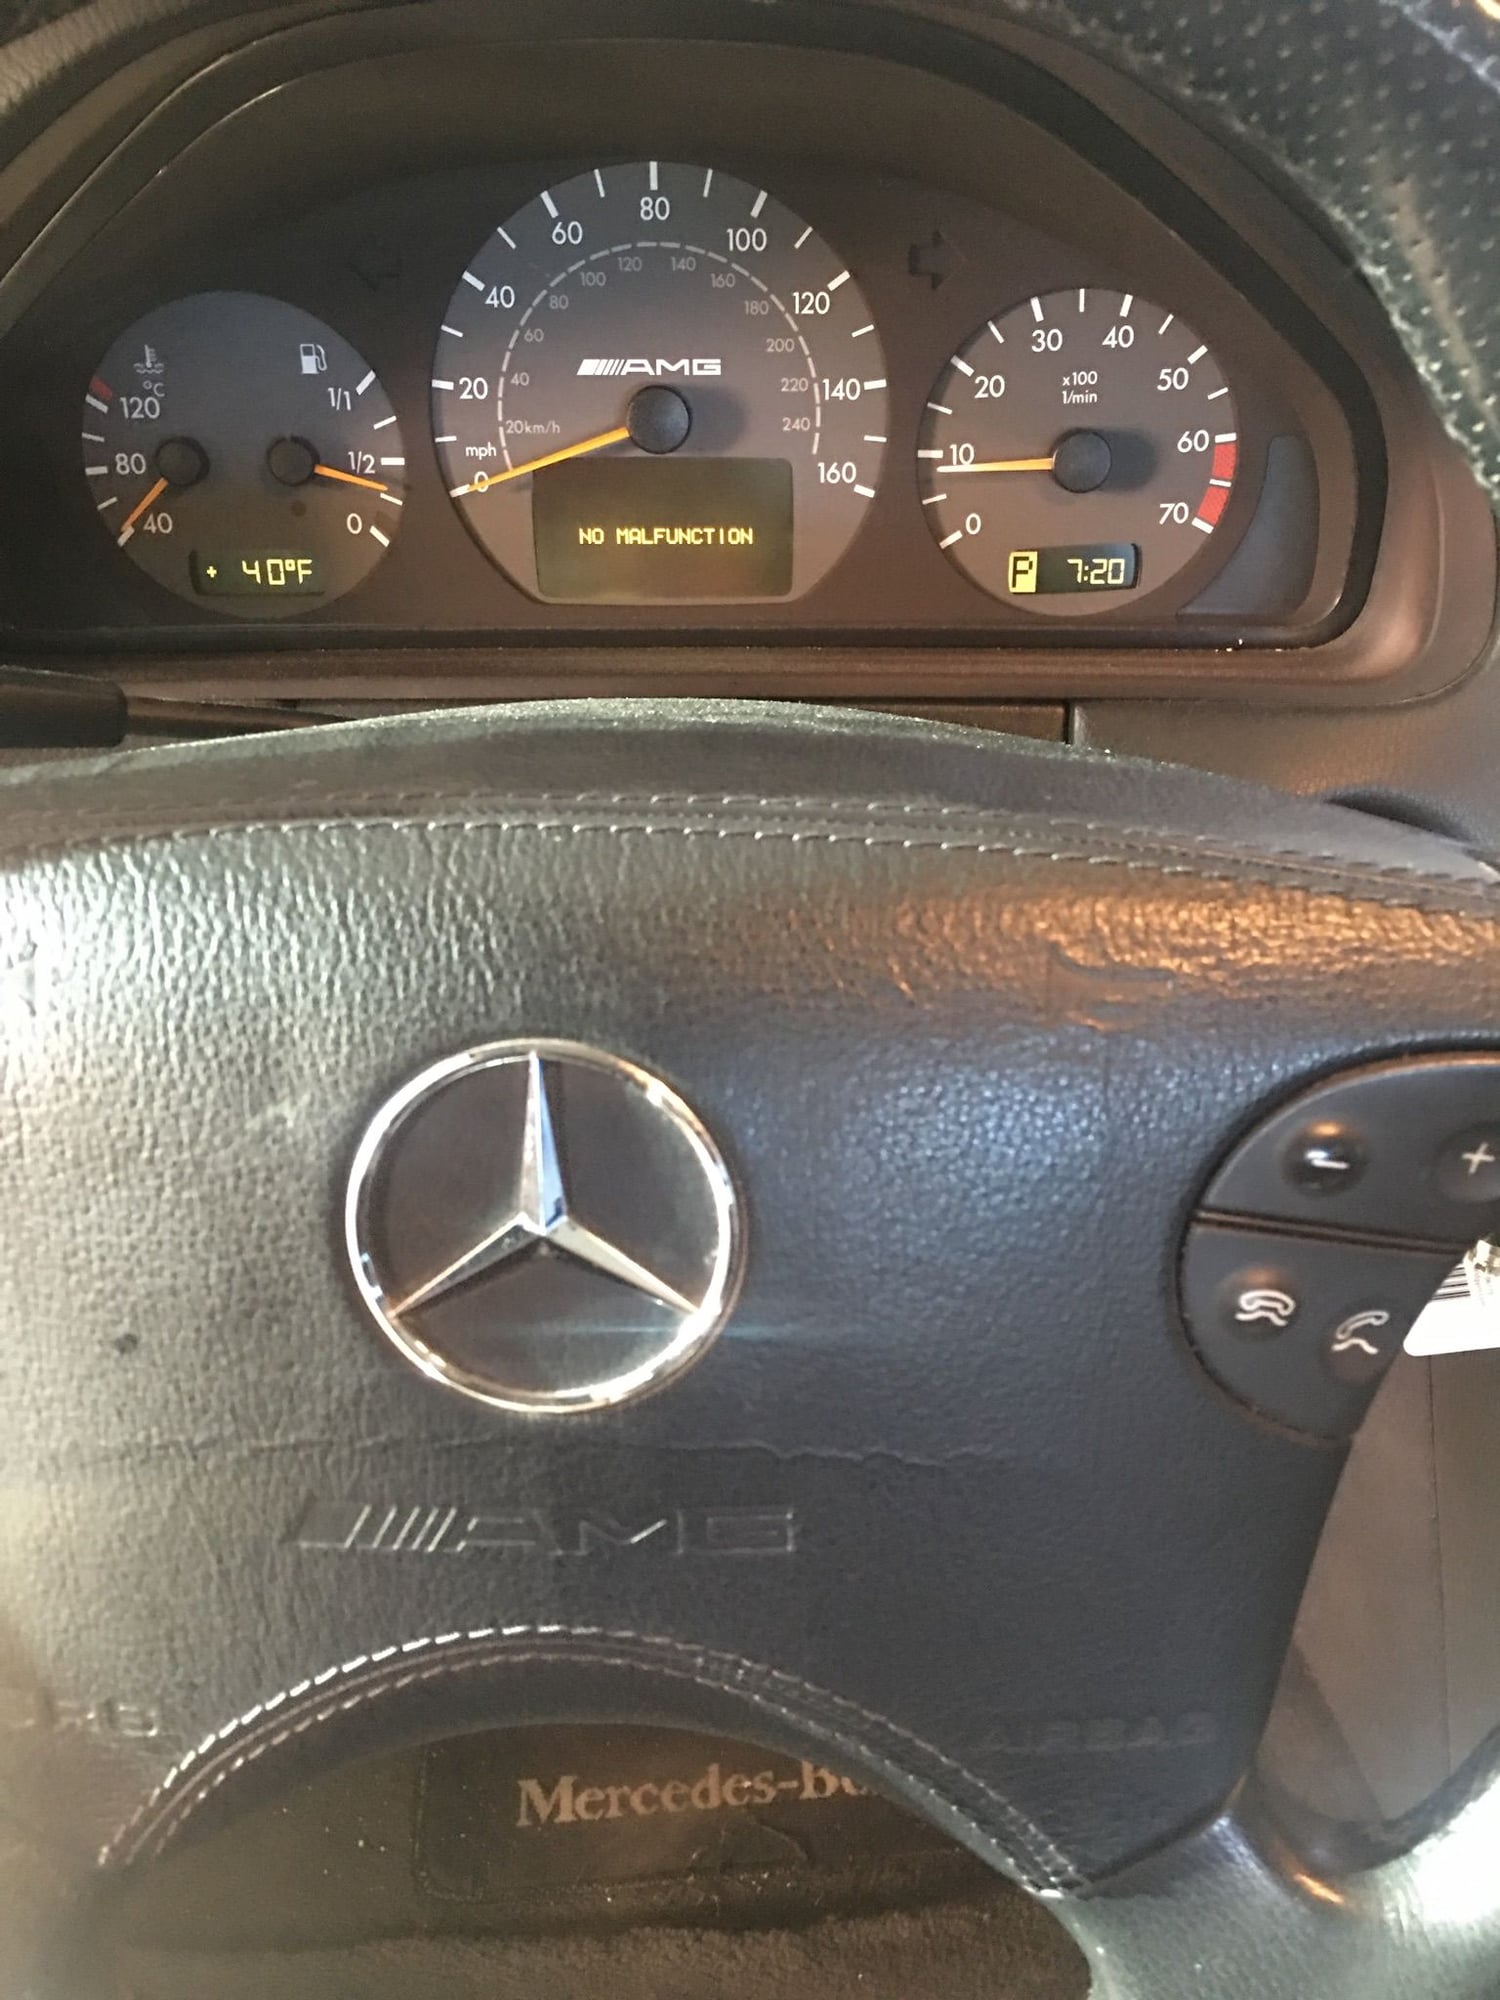 2000 Mercedes-Benz E55 AMG - W210 E55 - Used - VIN Wdbjf74jxyb044469 - 127,000 Miles - 8 cyl - Sedan - White - Watertown, CT 06795, United States